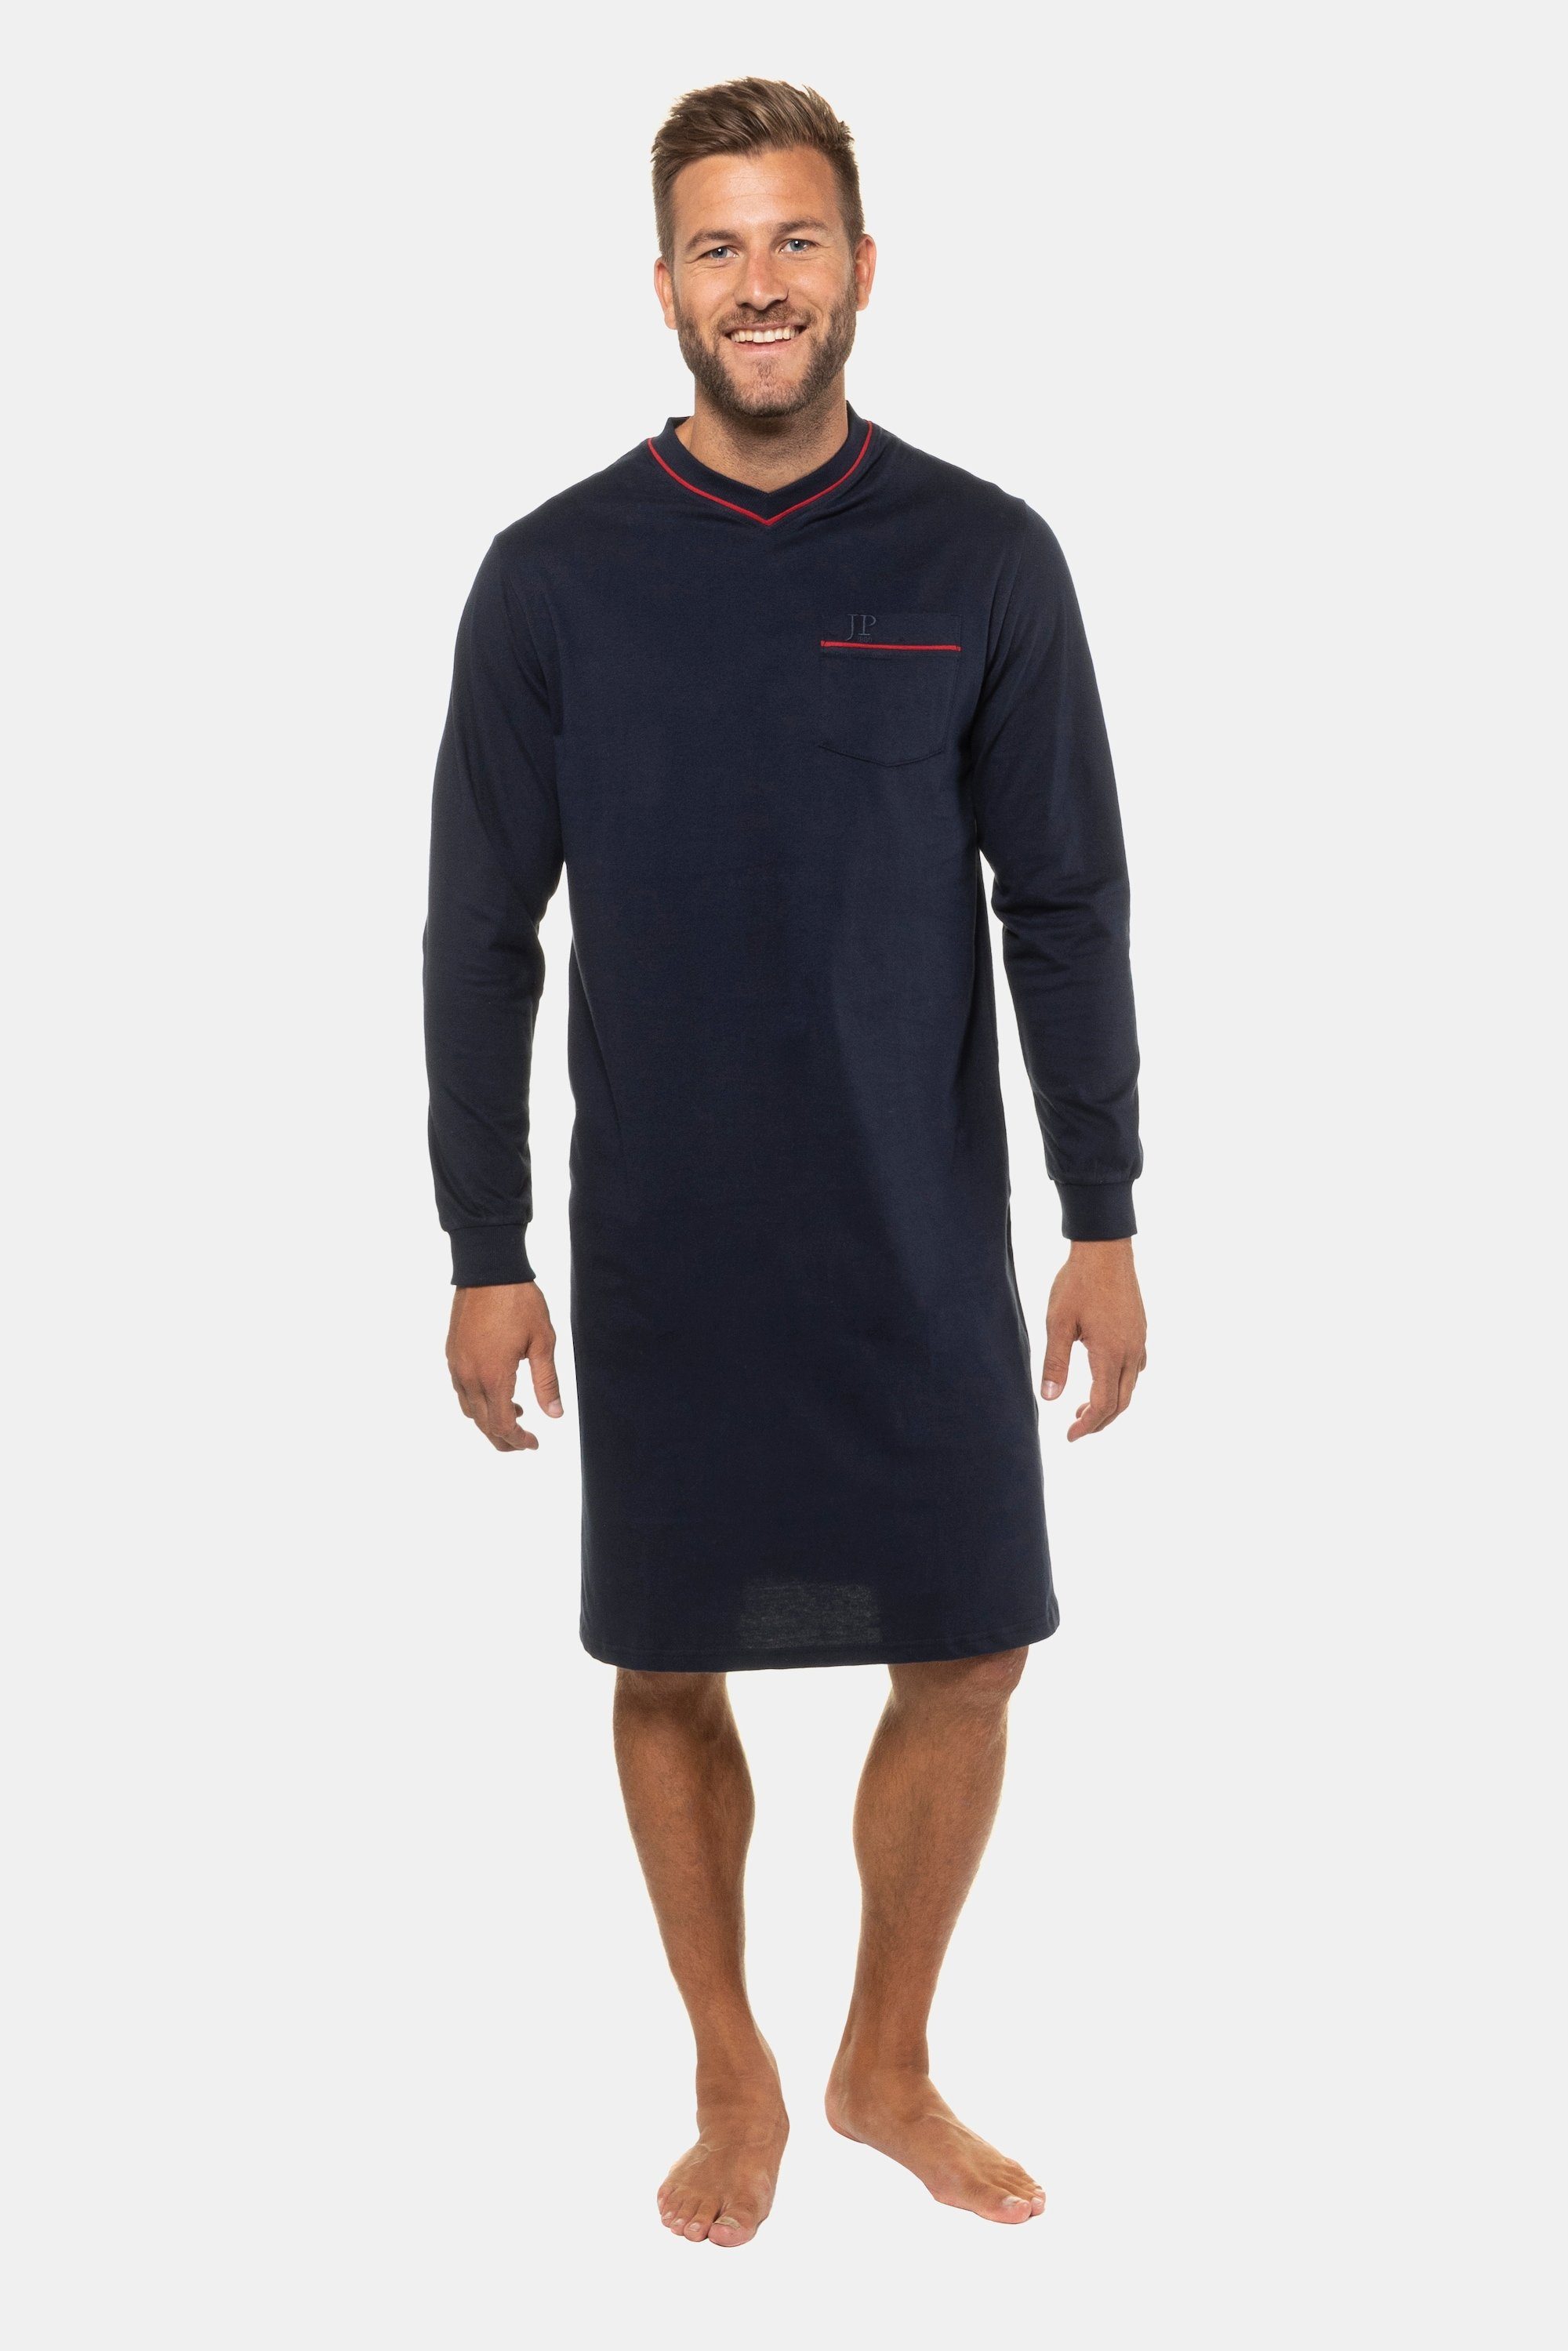 Langarm Gr Schlafanzug Nachthemd dunkel JP1880 bis 8XL marine uni Homewear